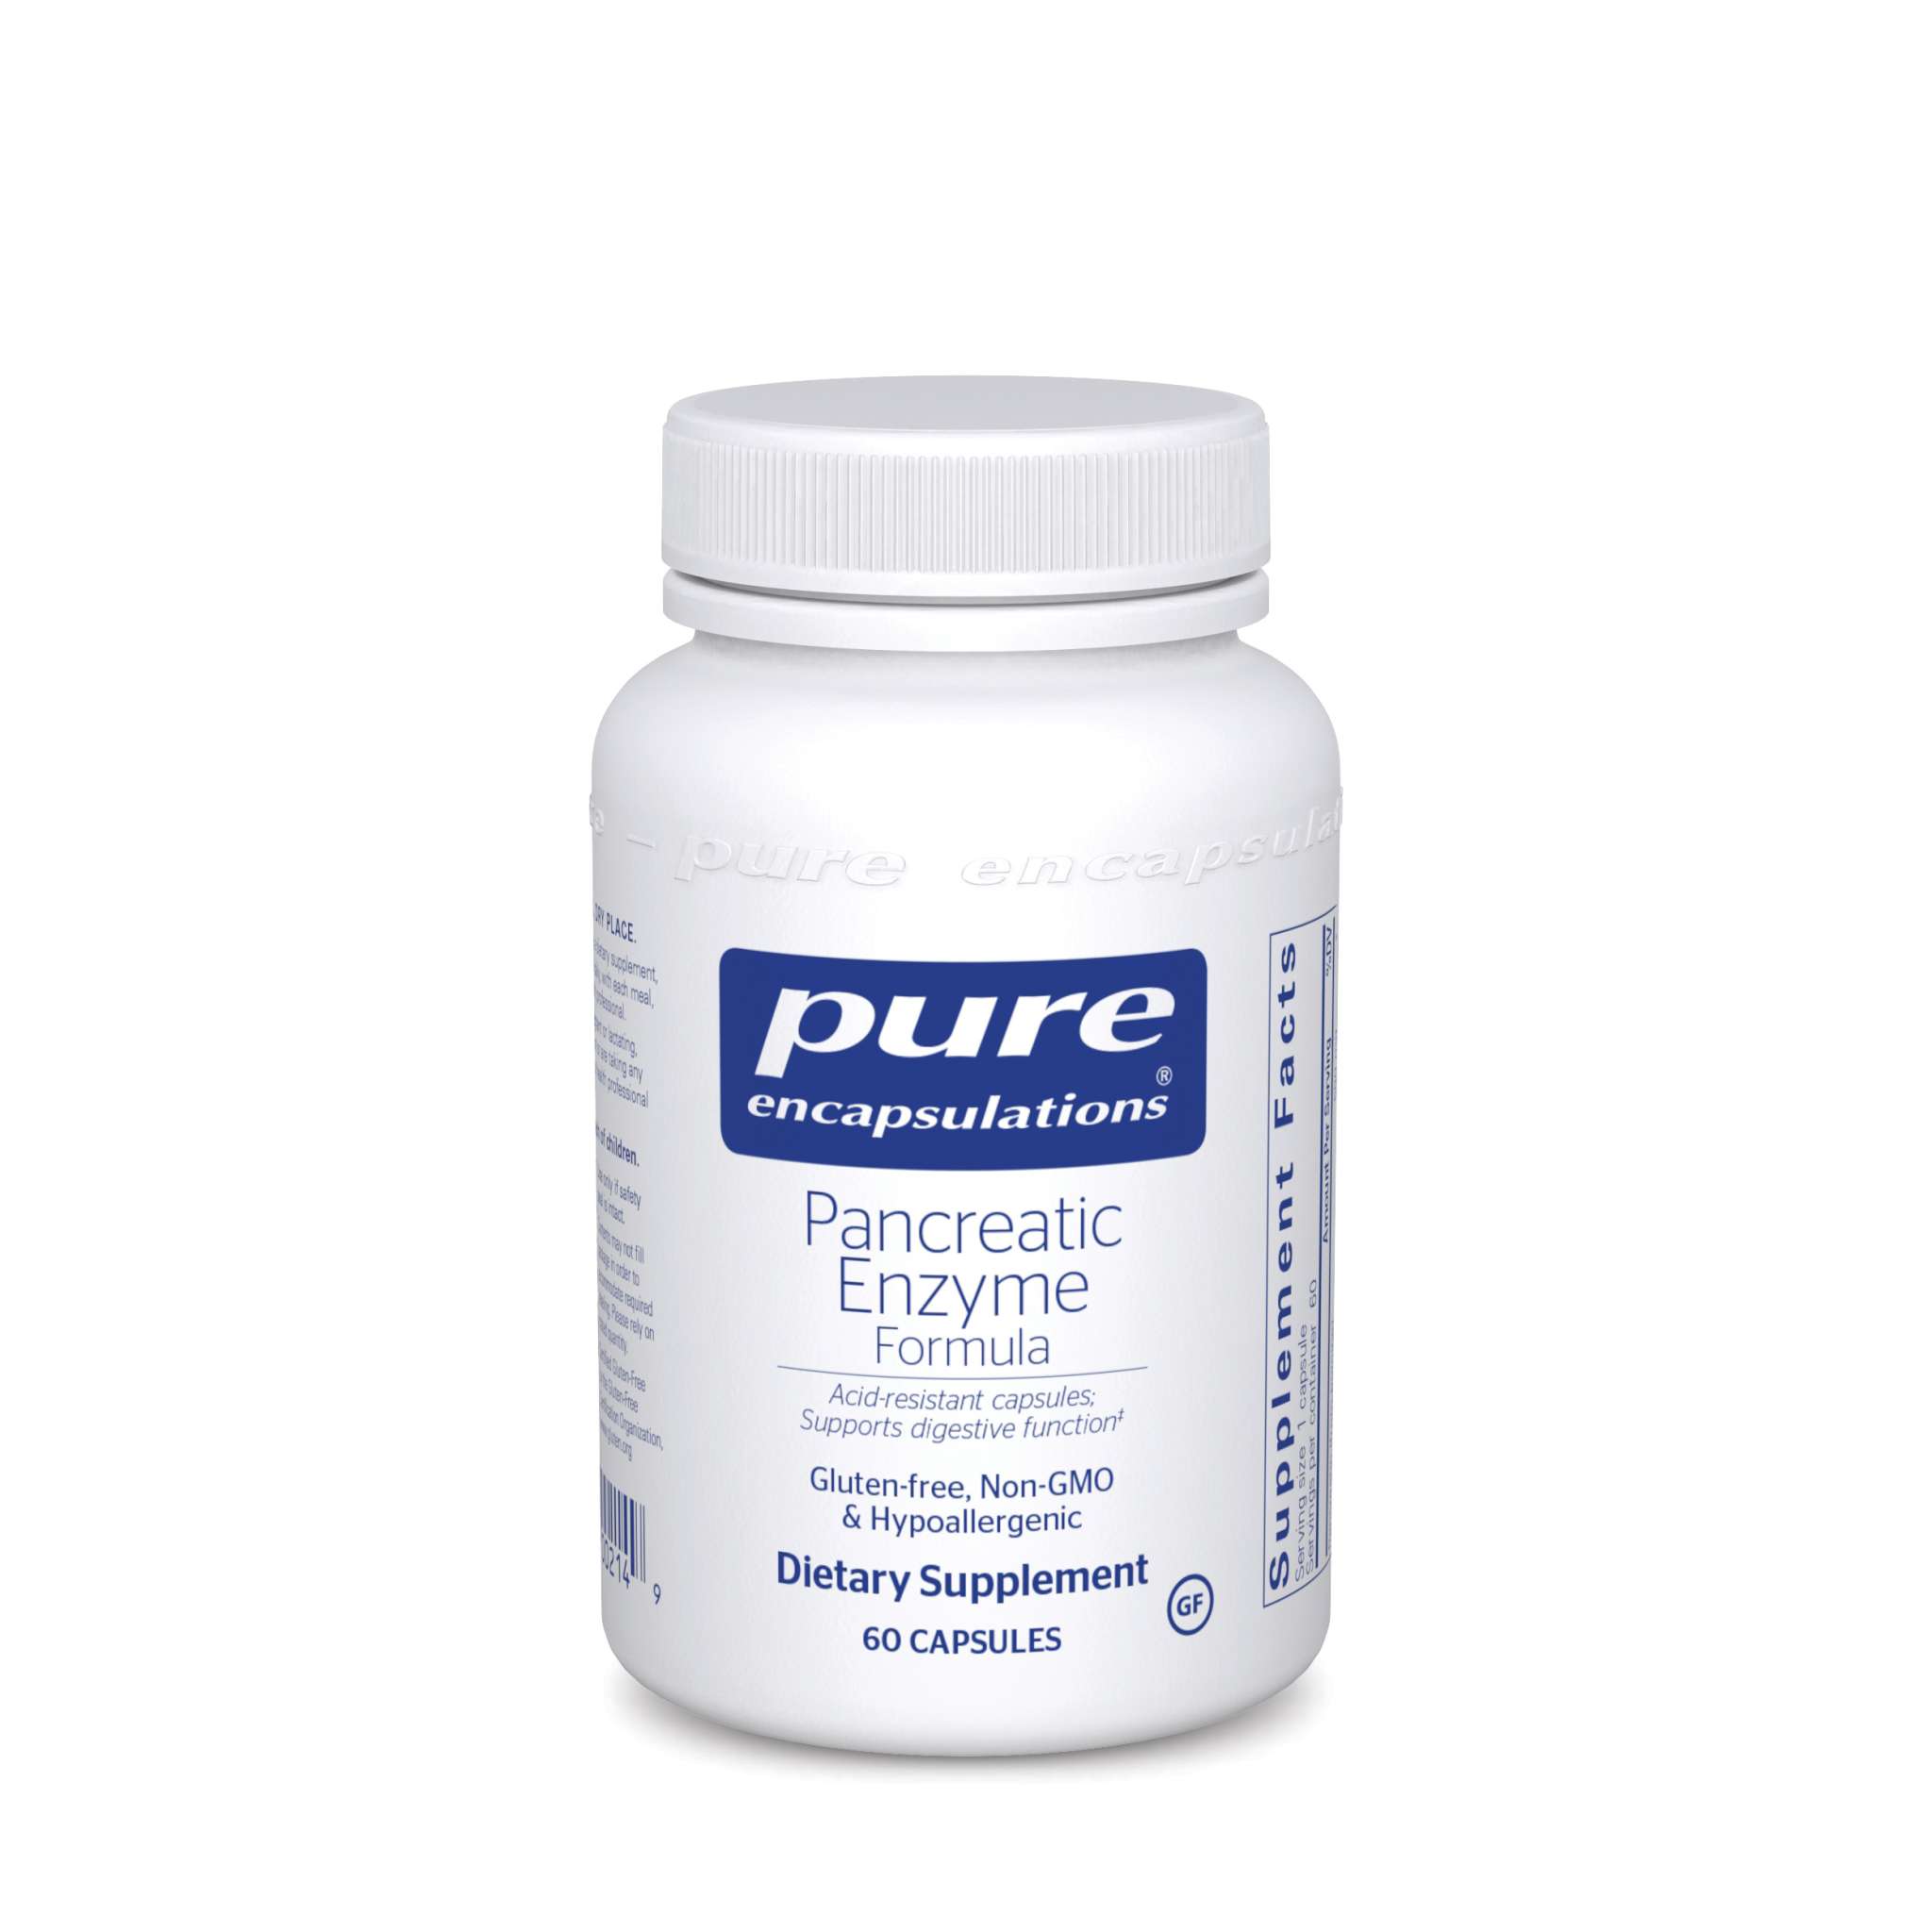 Pure Encapsulations - Pancreatic Enzyme Formula